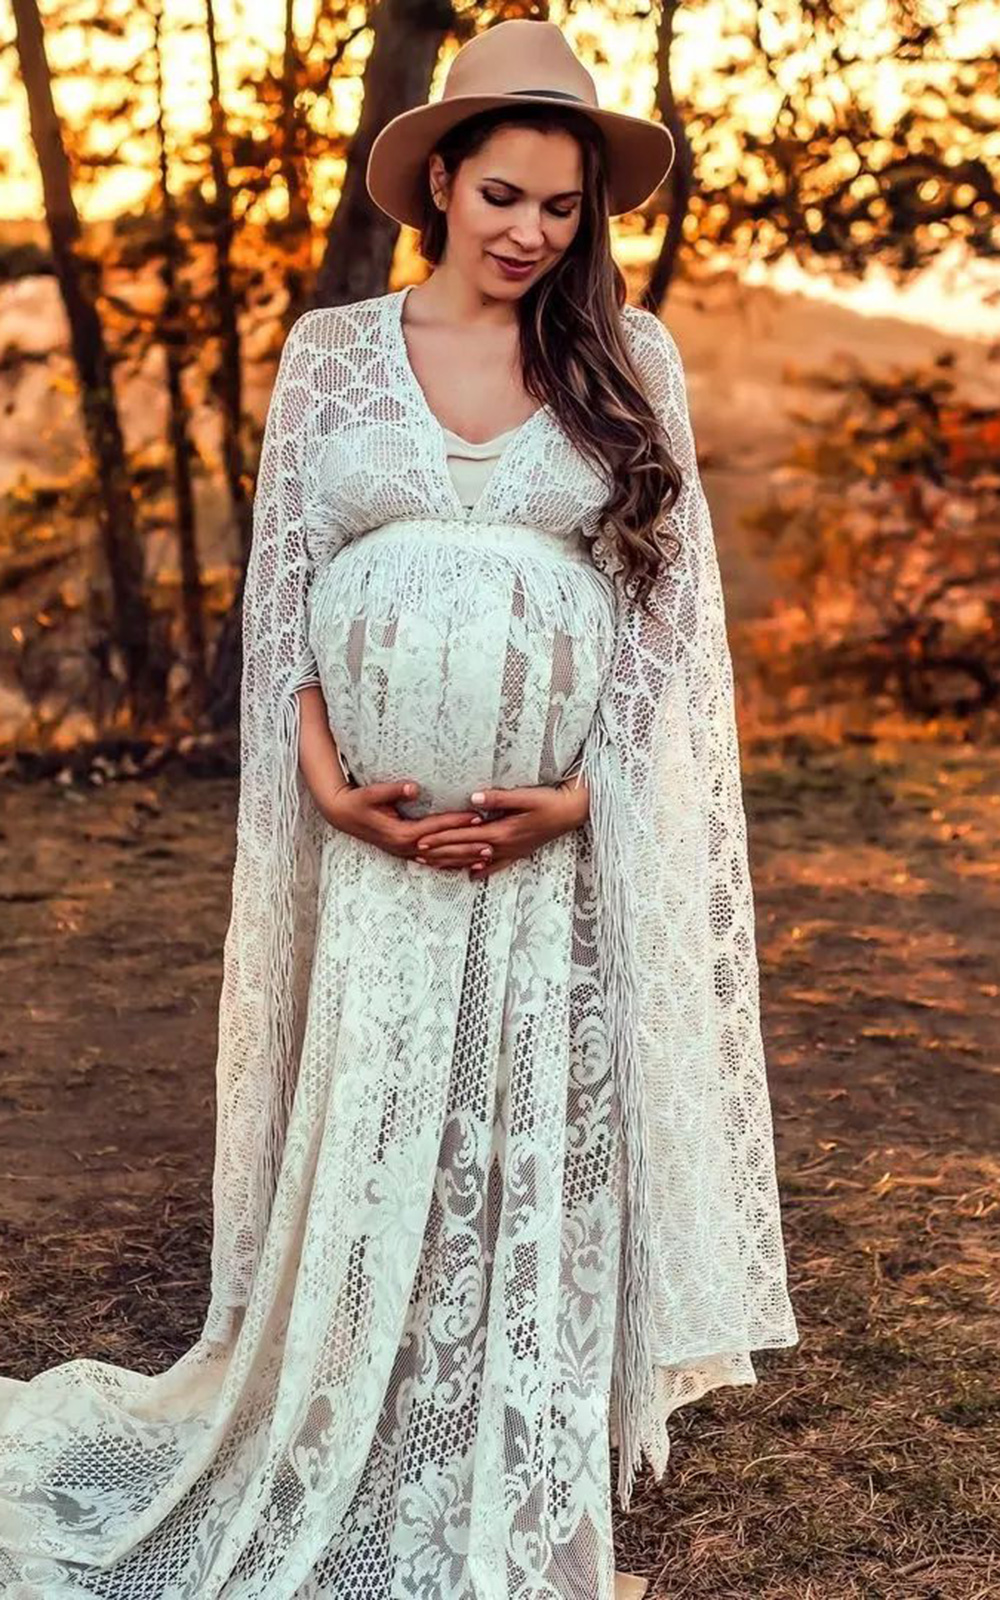 Pregnant Wedding Dress Shopping Tips | Glamour UK